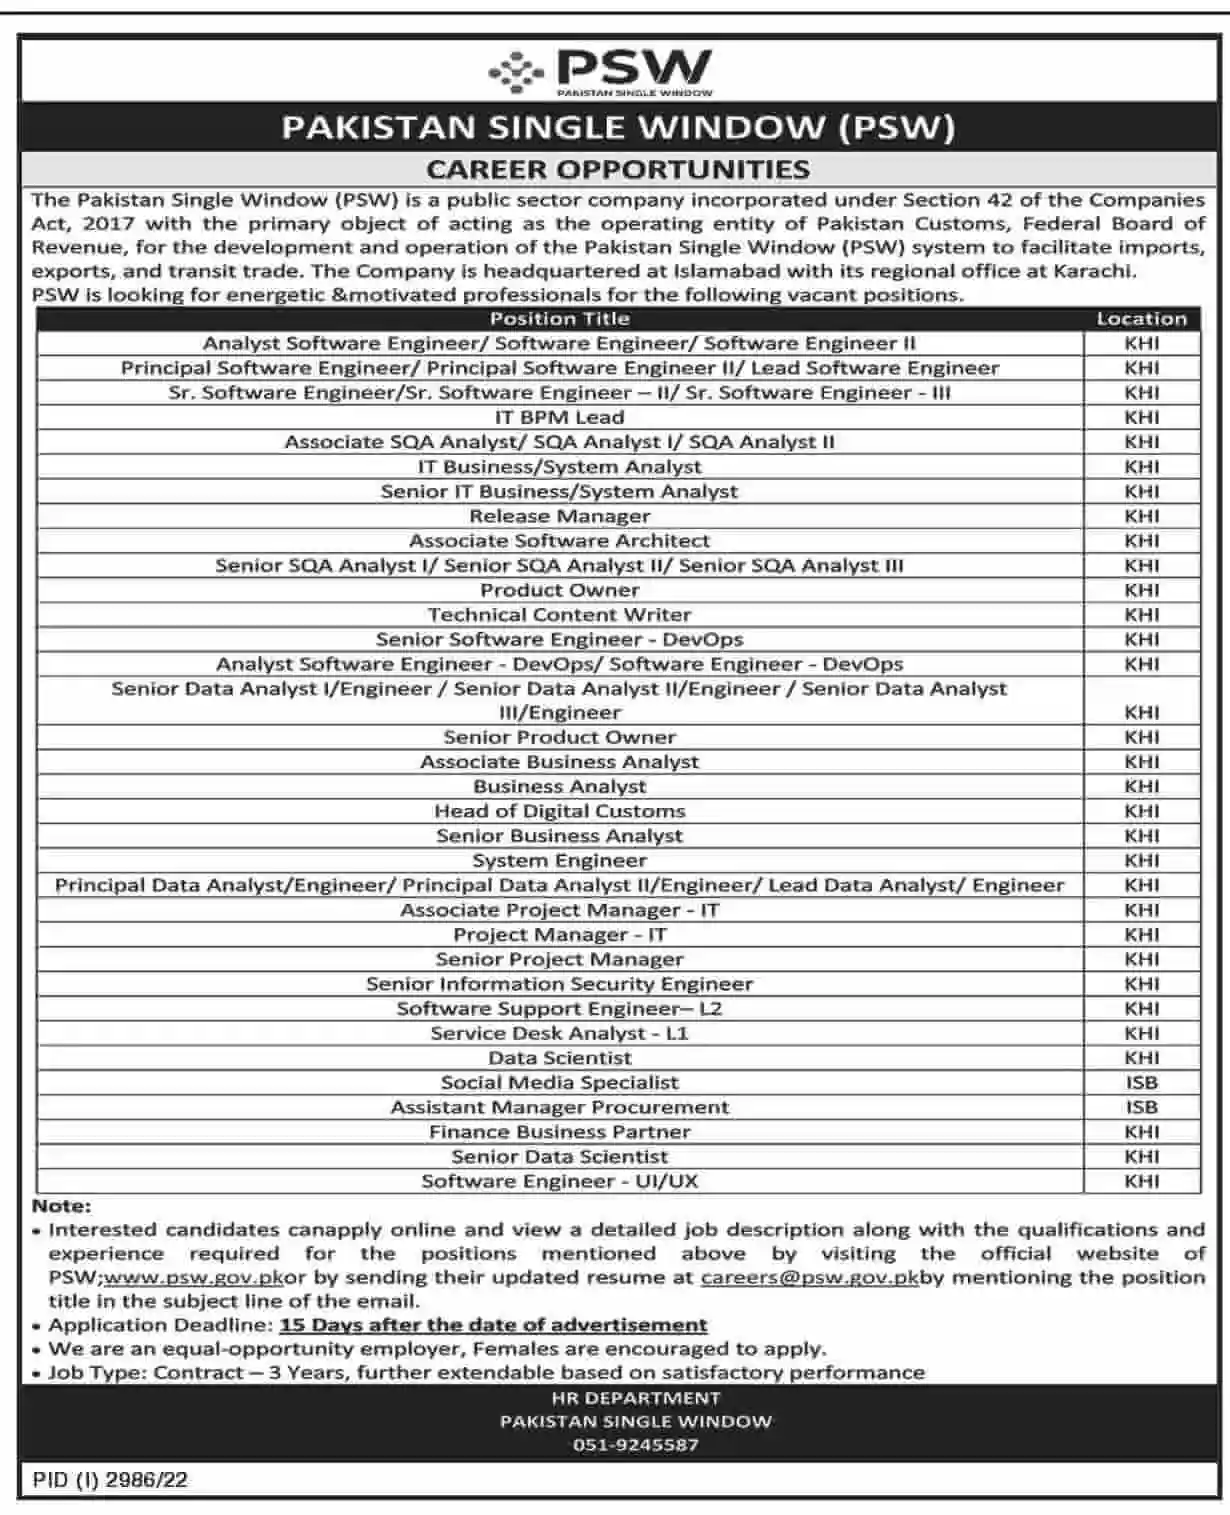 Pakistan Single Window PSW Jobs 2022 - Apply Online